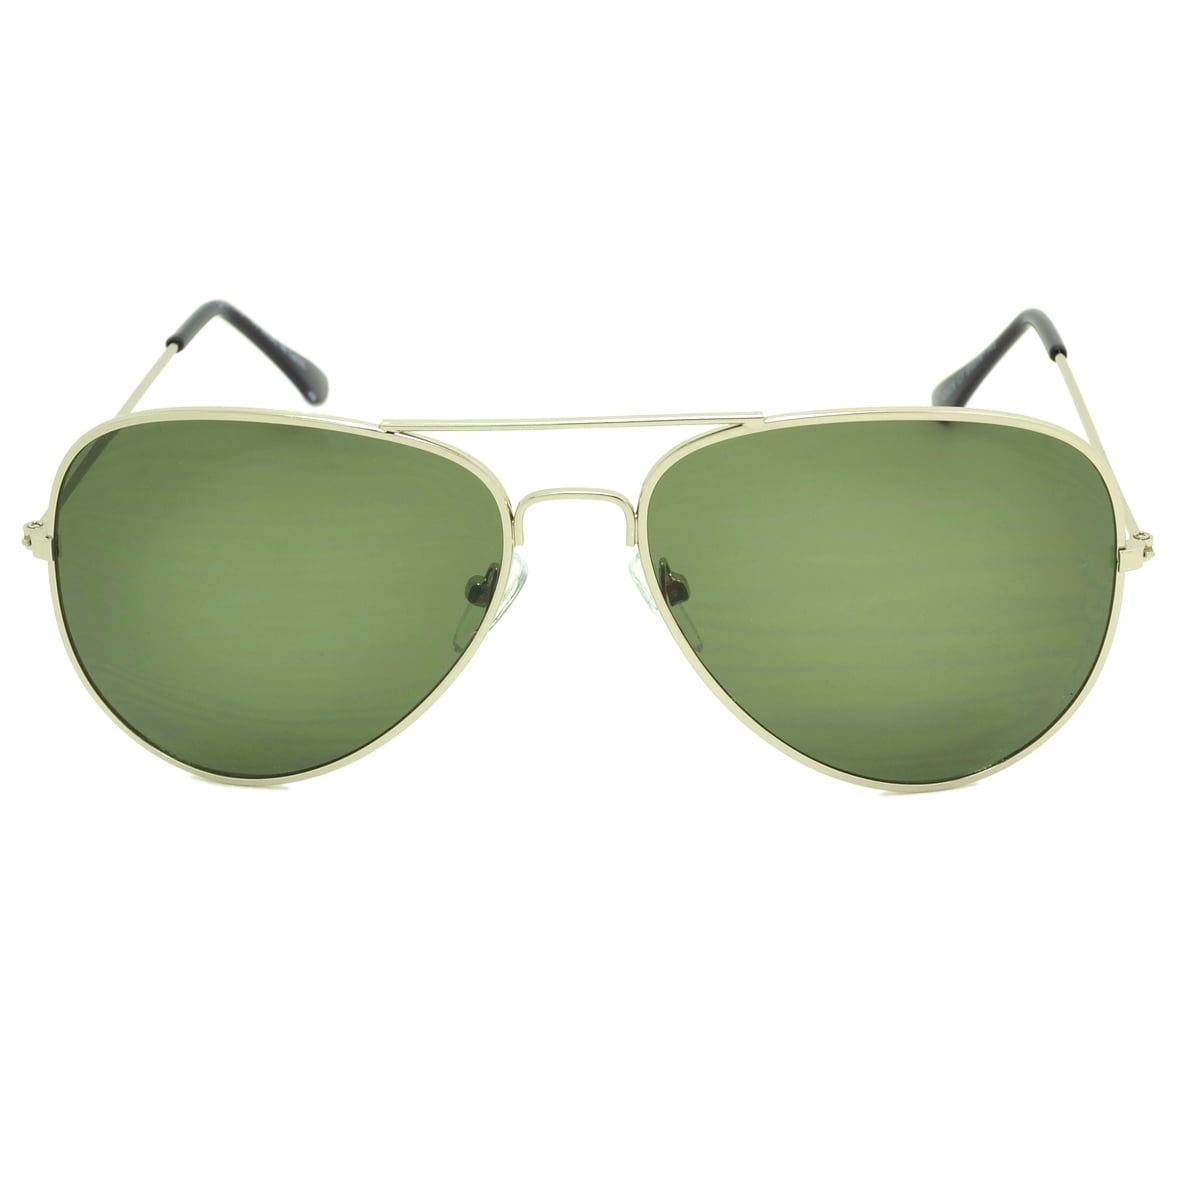 Dasein Metal Aviator Polarized Sunglasses with 100% UV Protection - image 1 of 4